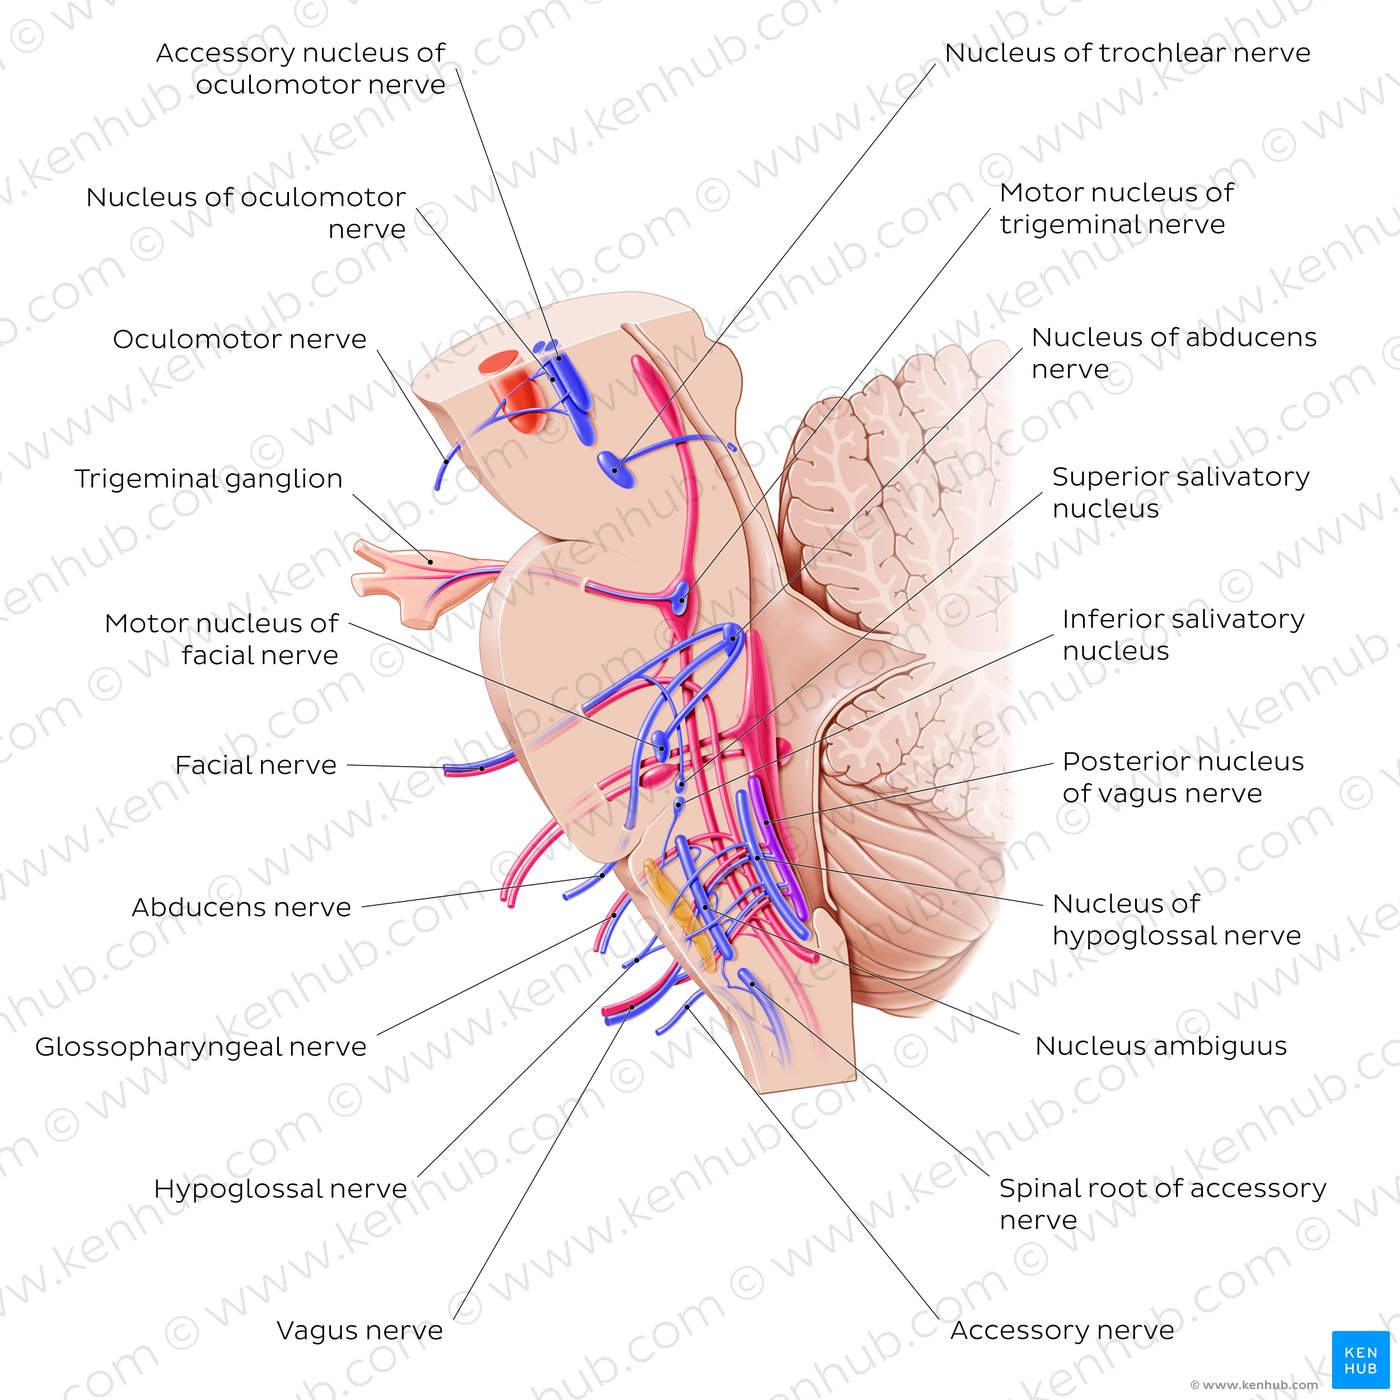 Cranial nerve nuclei - sagittal view (efferent)